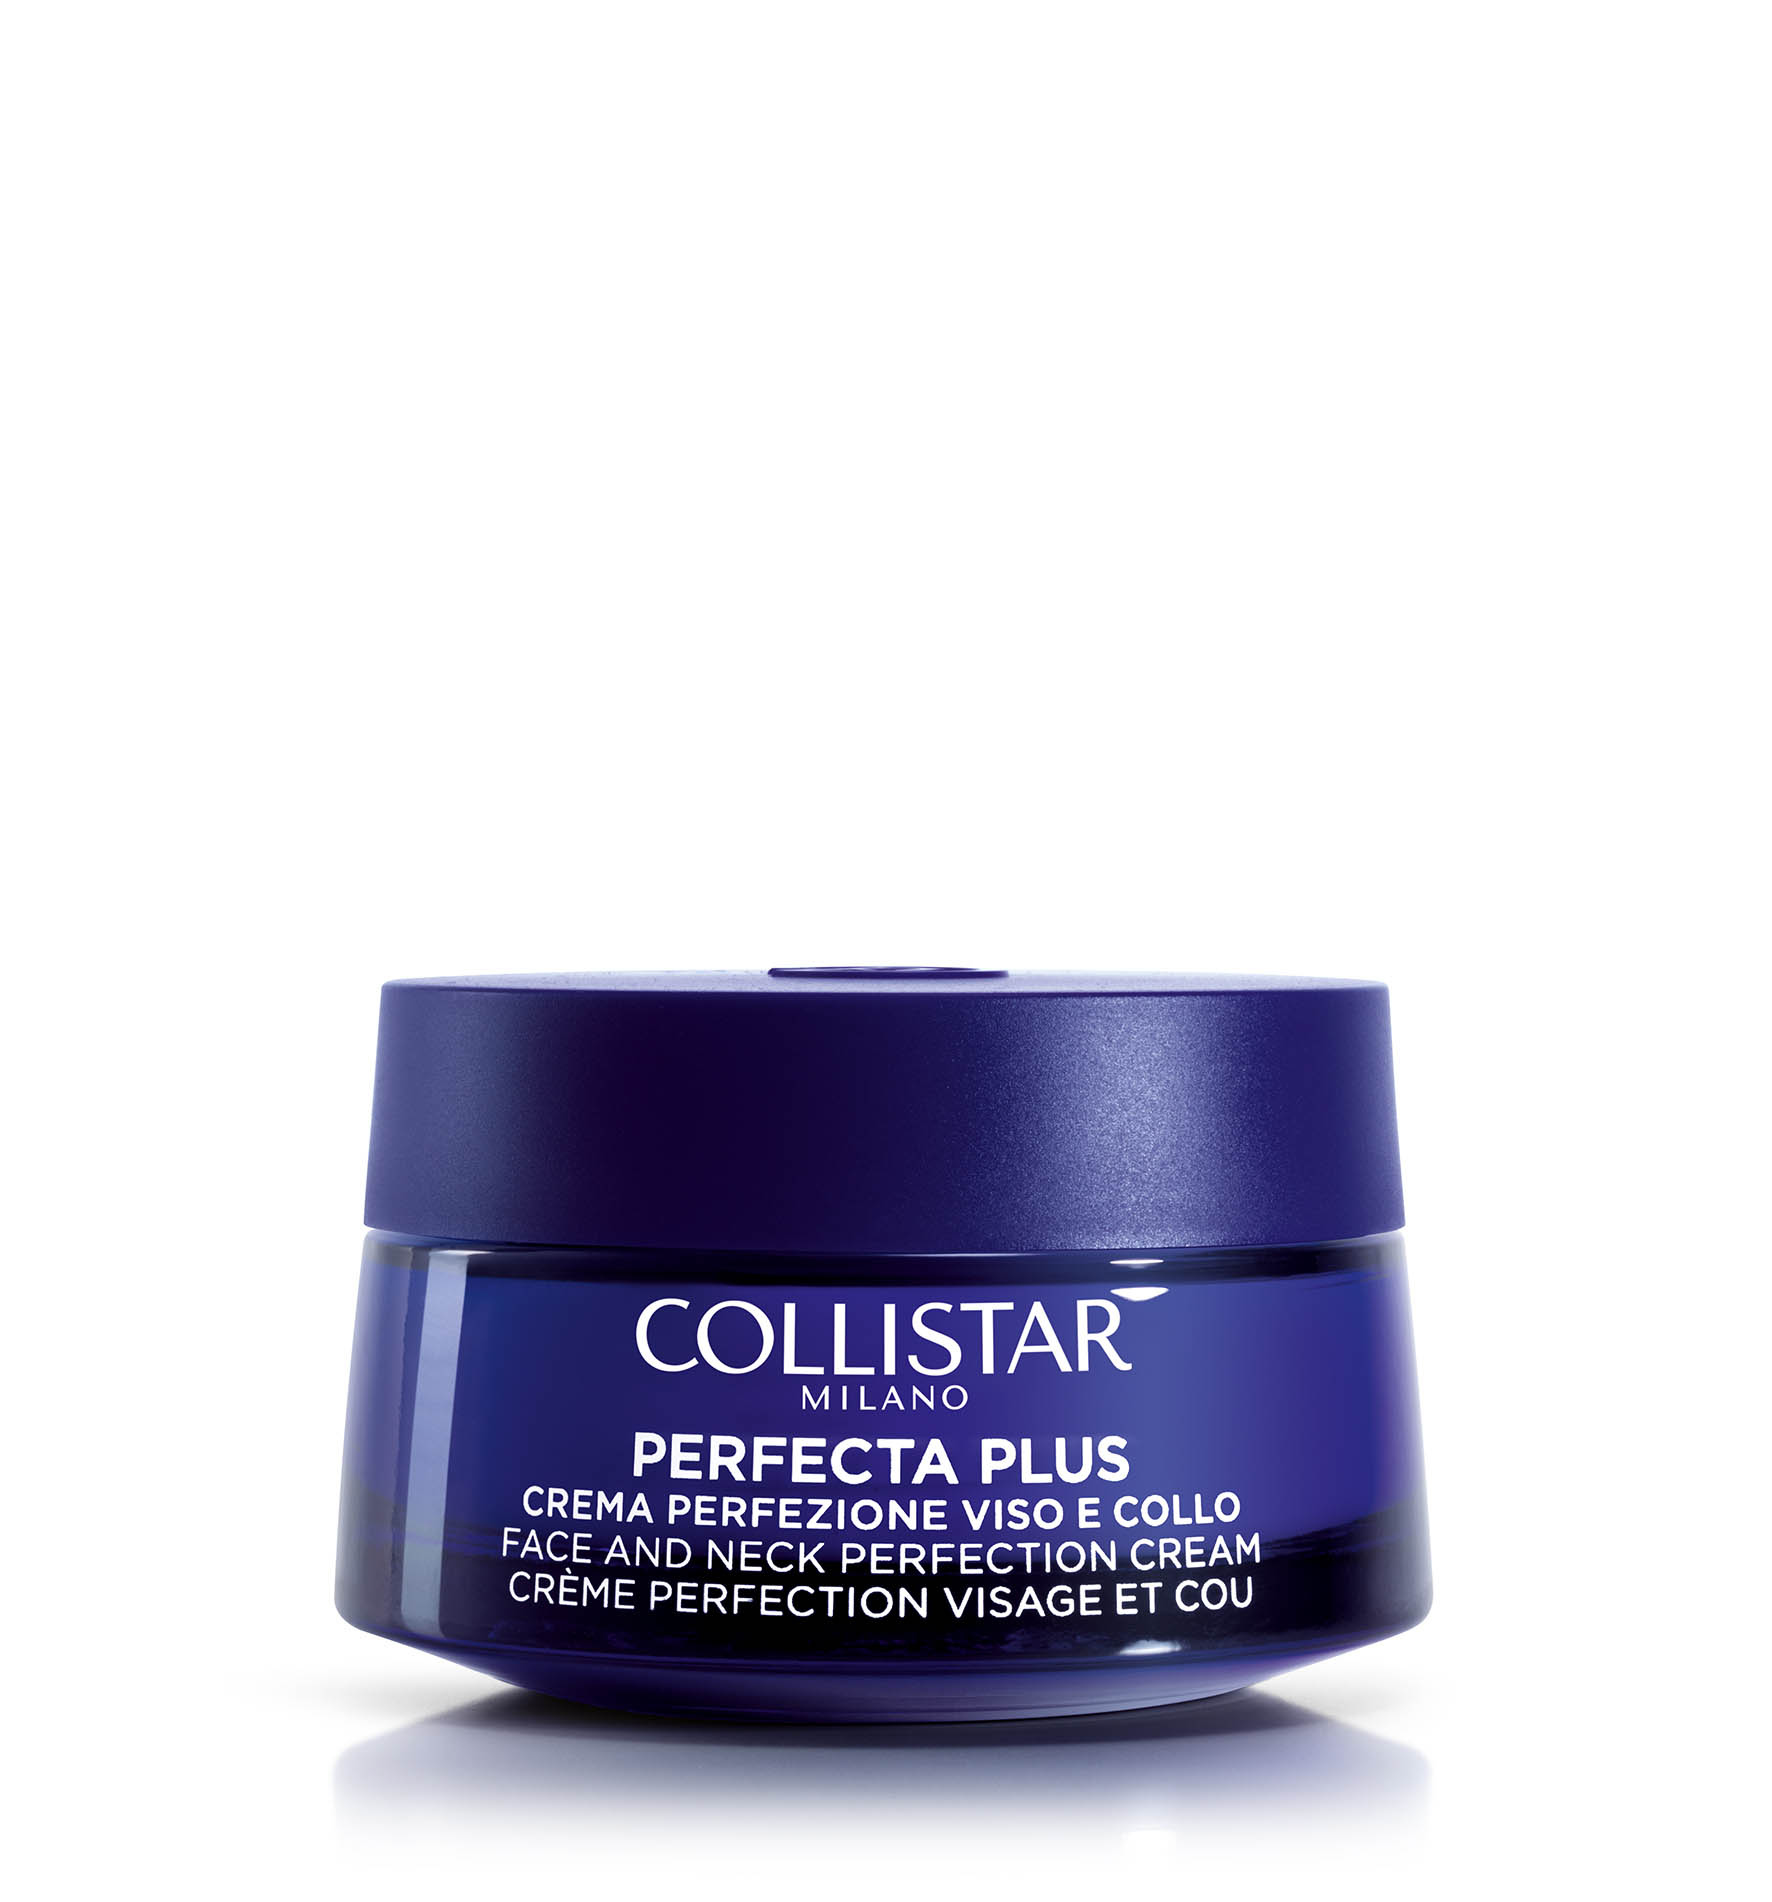 PERFECTA PLUS FACE AND NECK PERFECTION CREAM - Face creams  | Collistar - Shop Online Ufficiale